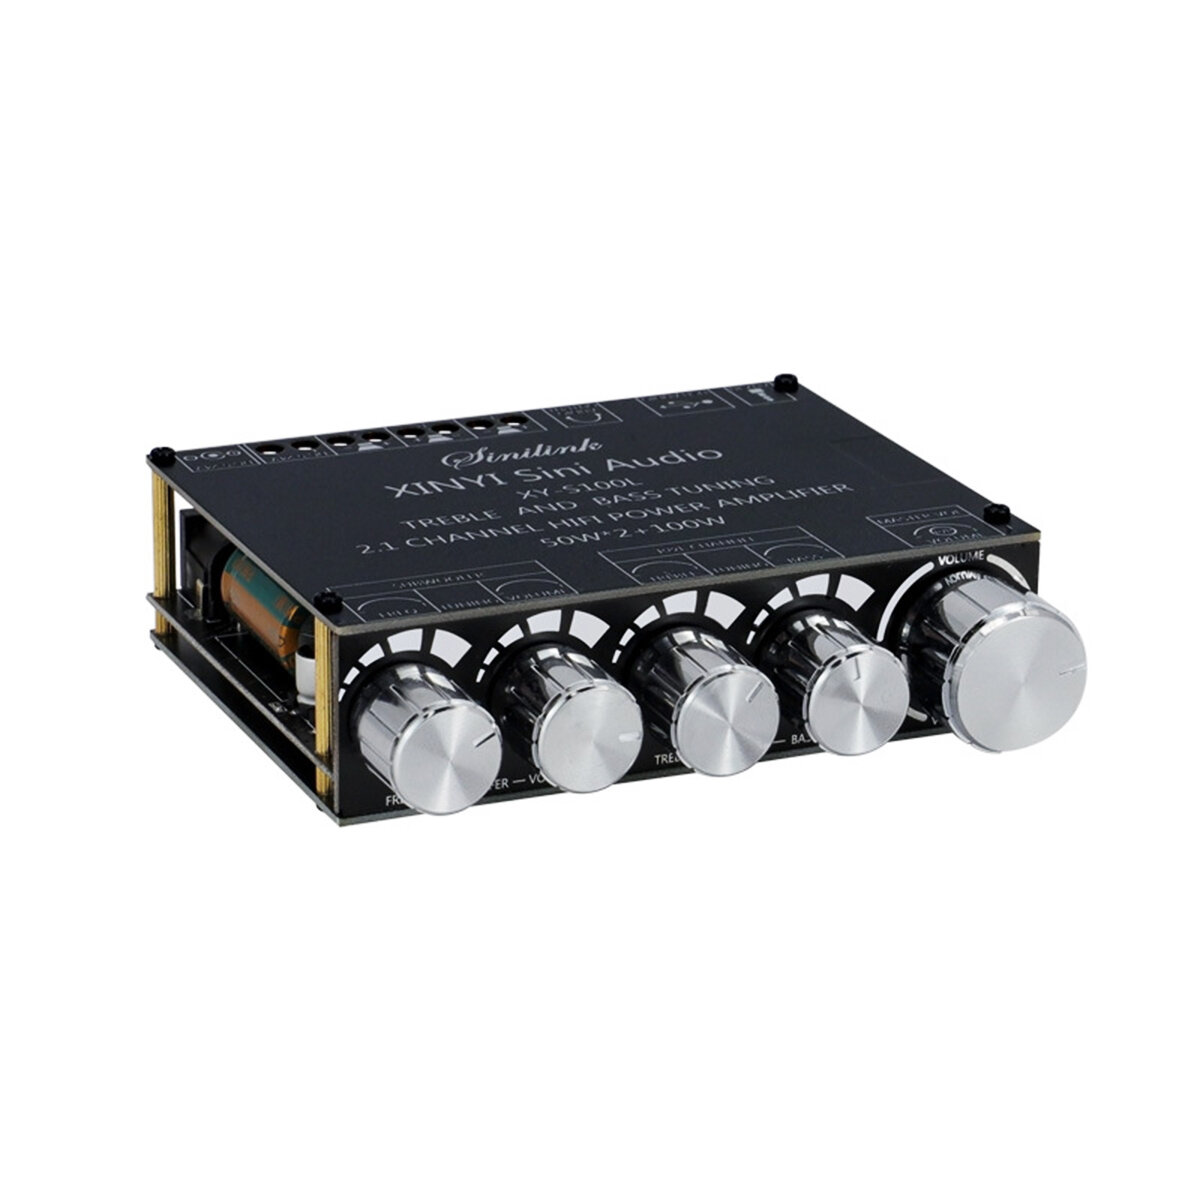 Xy-s100l 2.1 channel bluetooth amplifier 50*2+100w subwoofer hifi stereo aux bluetooth digital amplifier